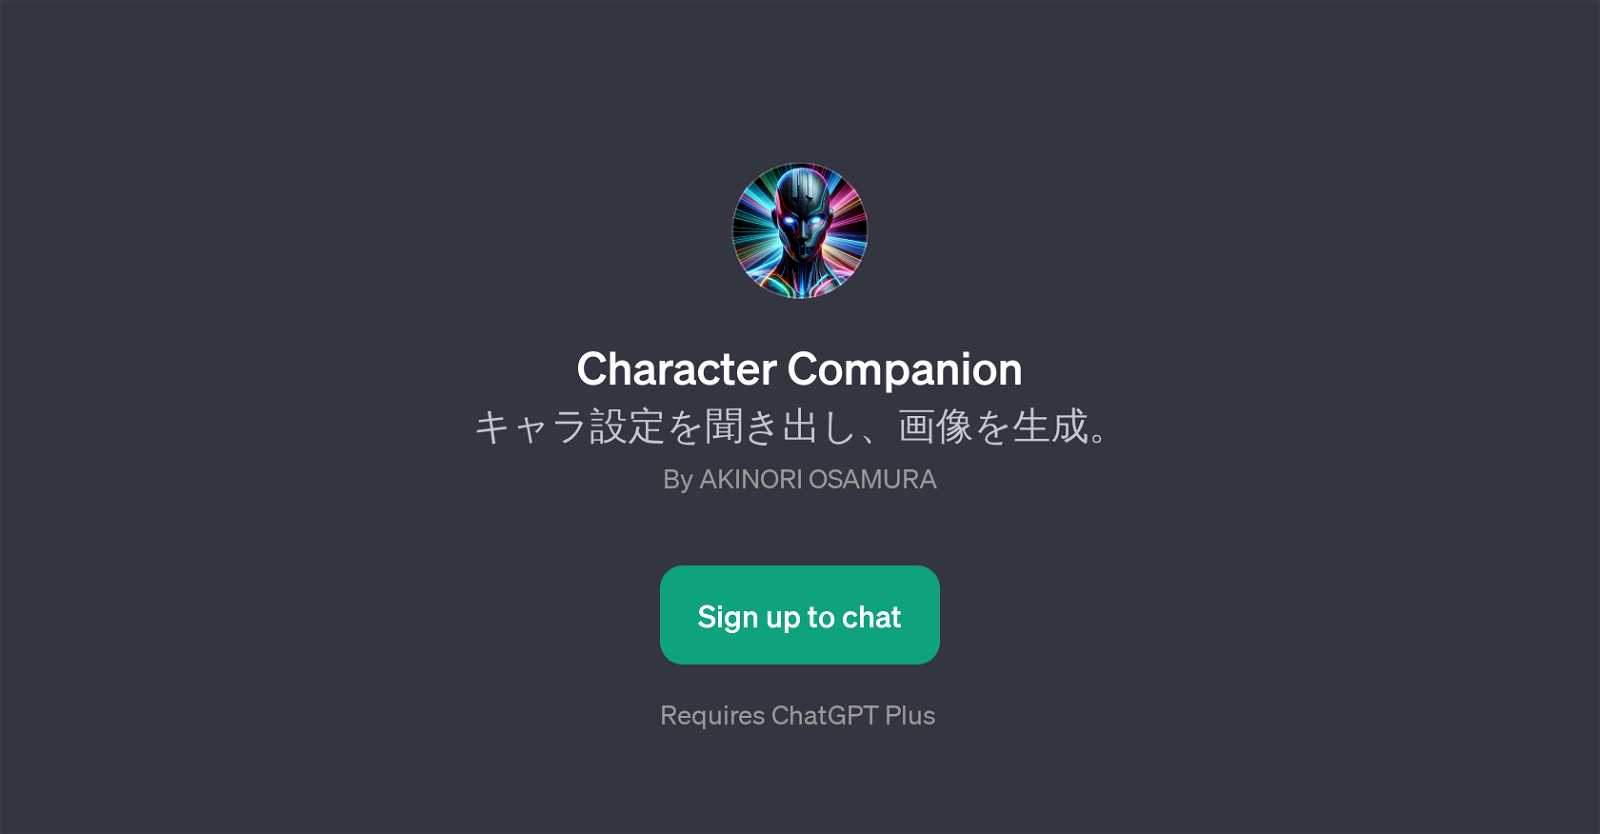 Character Companion website